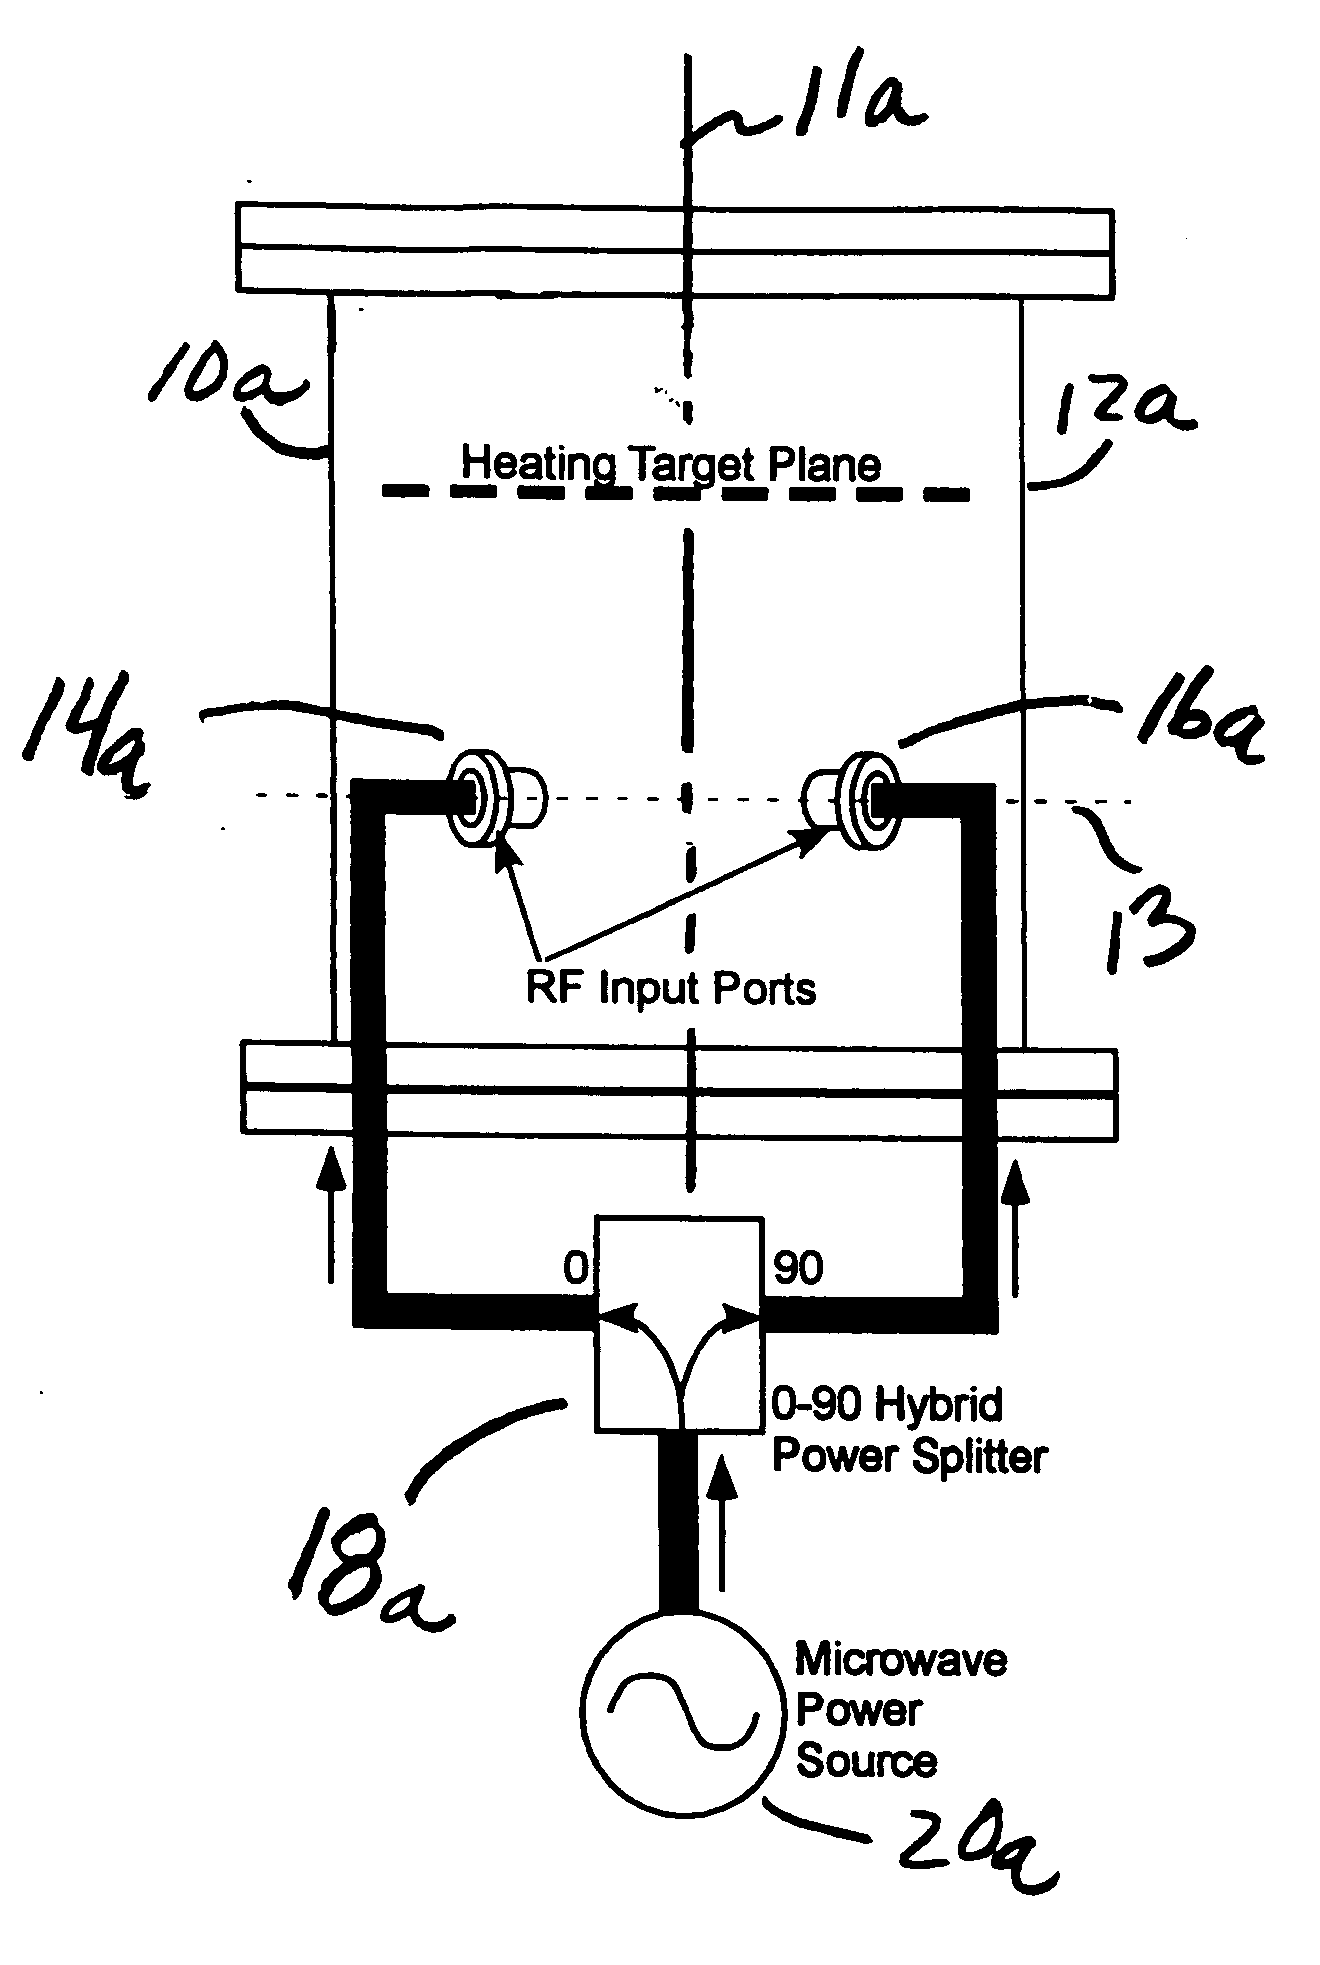 Uniform microwave heating method and apparatus